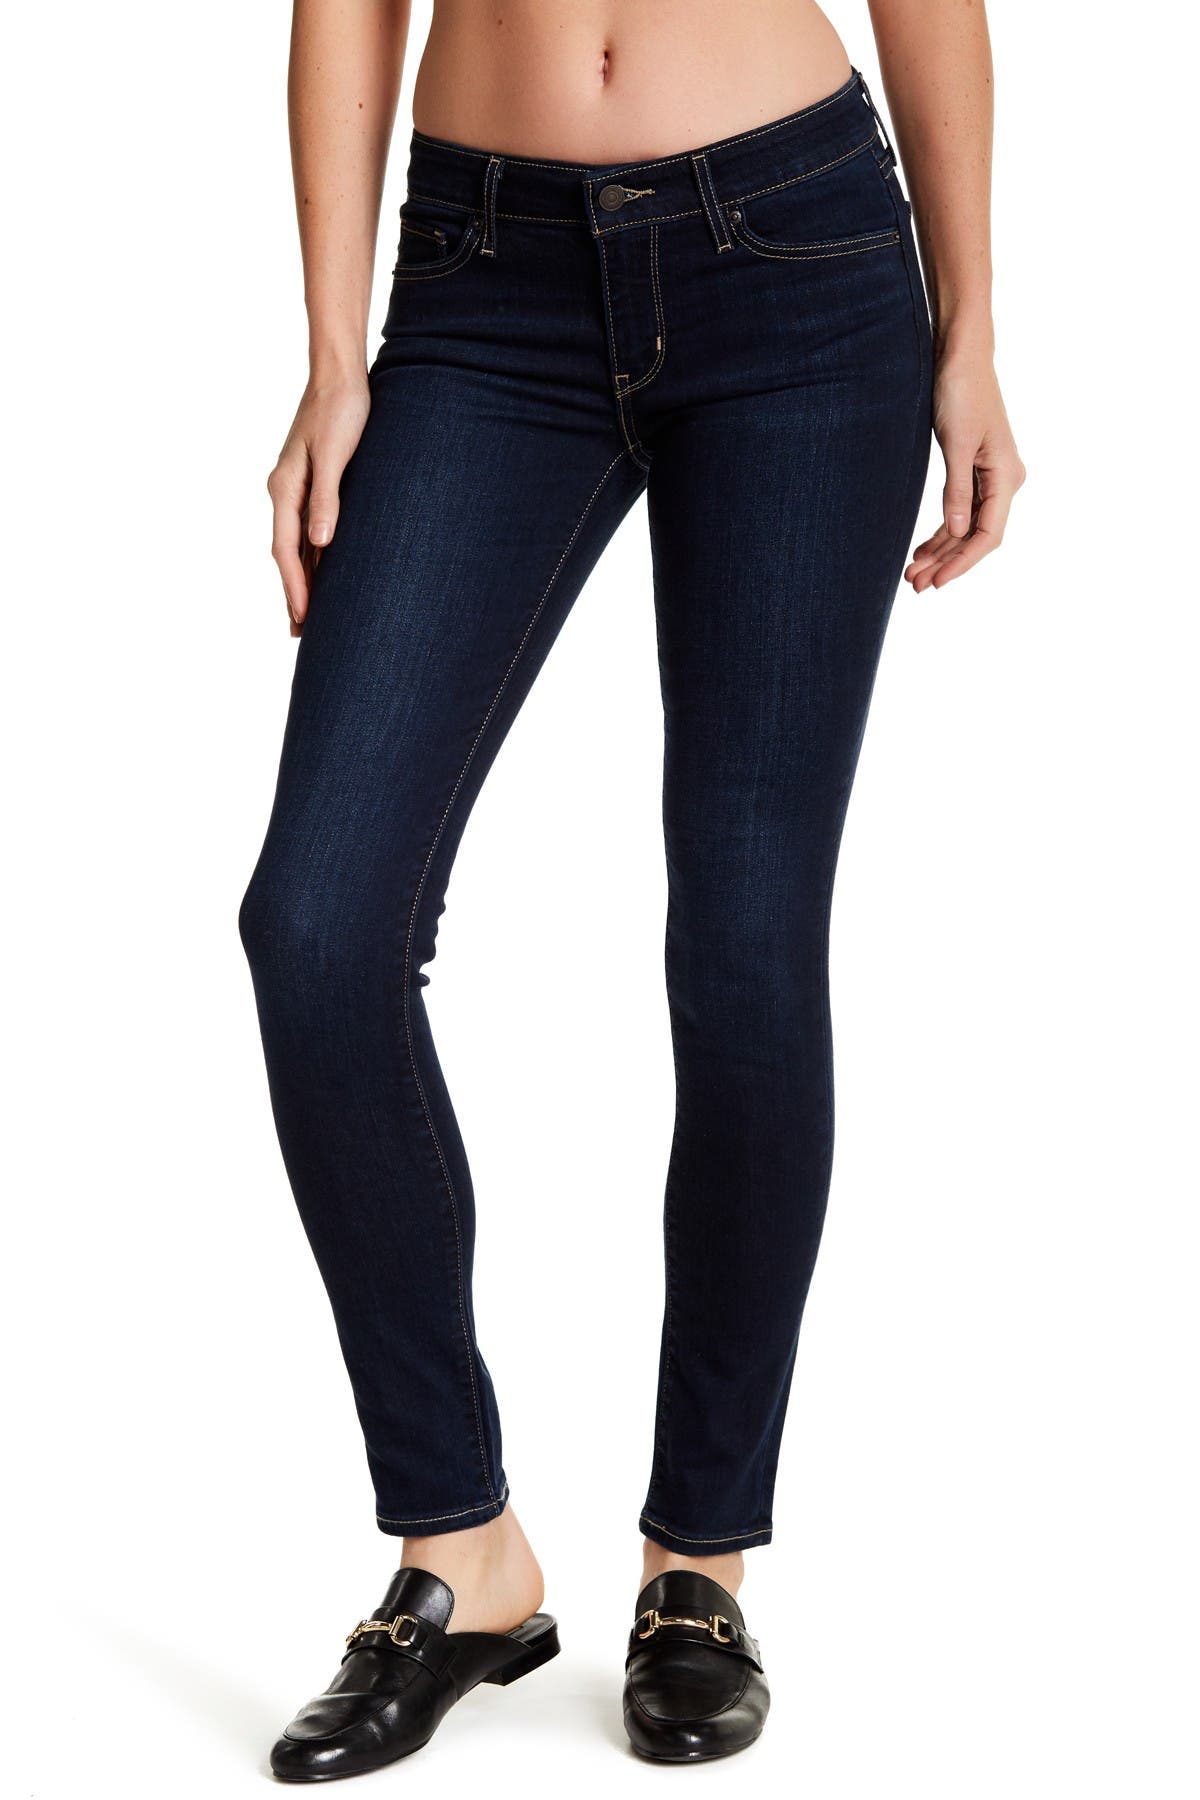 Levi's | 711 Selvedge Skinny Jeans - 30 